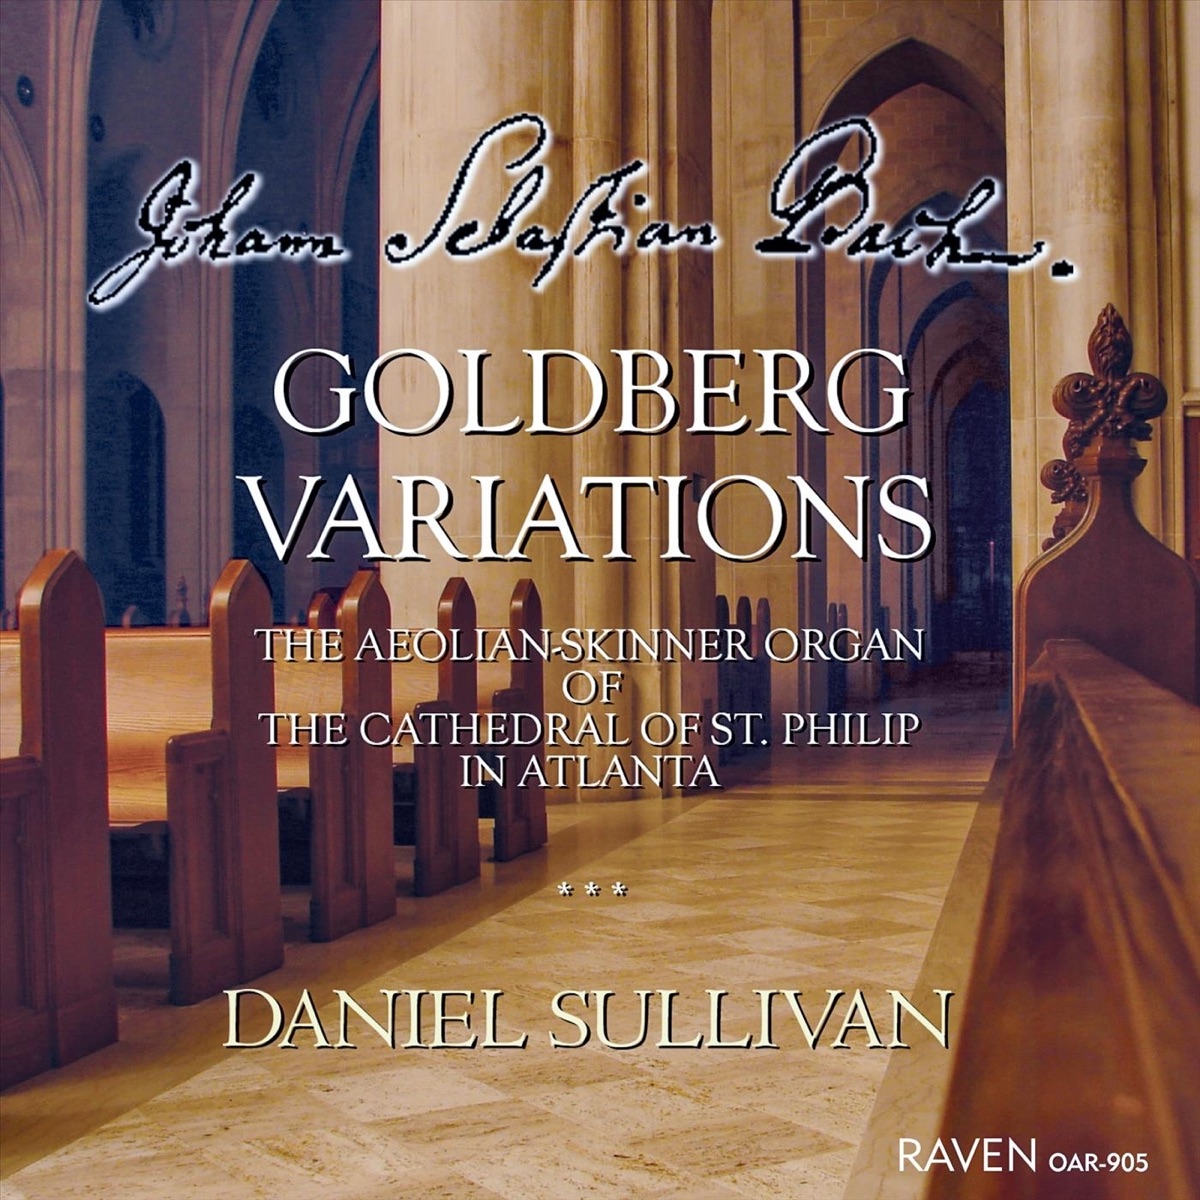 J. S. Bach: Goldberg Variations on The Aeolian-Skinner Organ of The  Cathedral of St. Philip in Atlanta - Album by Daniel Sullivan - Apple Music